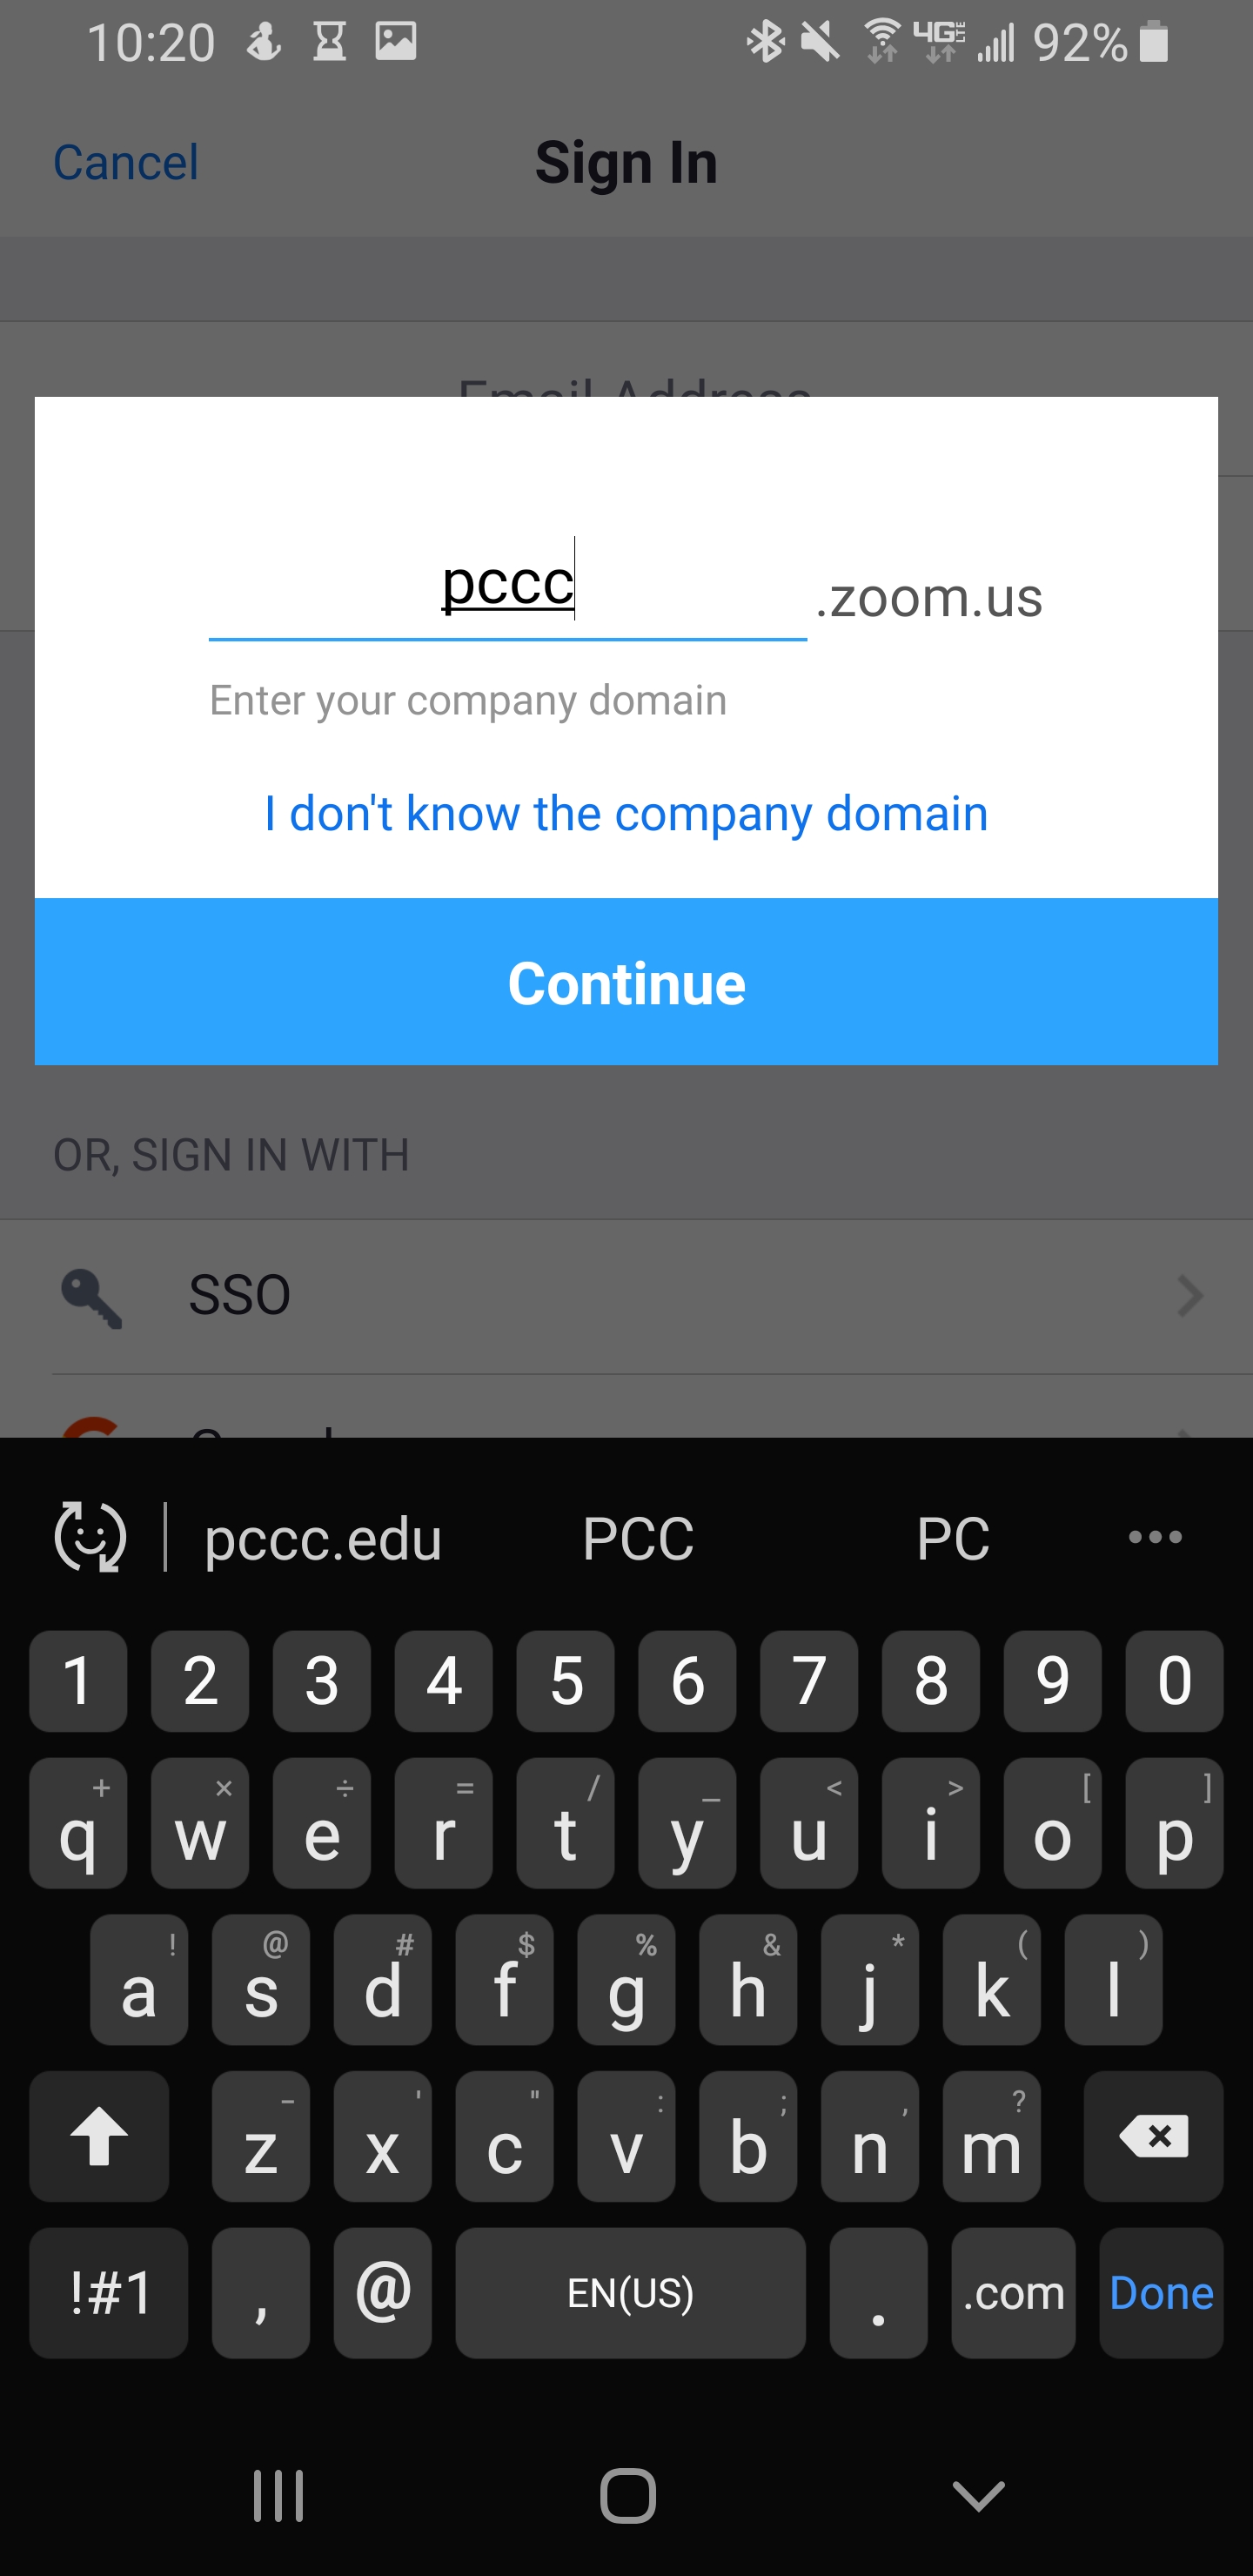 pccc domain entered